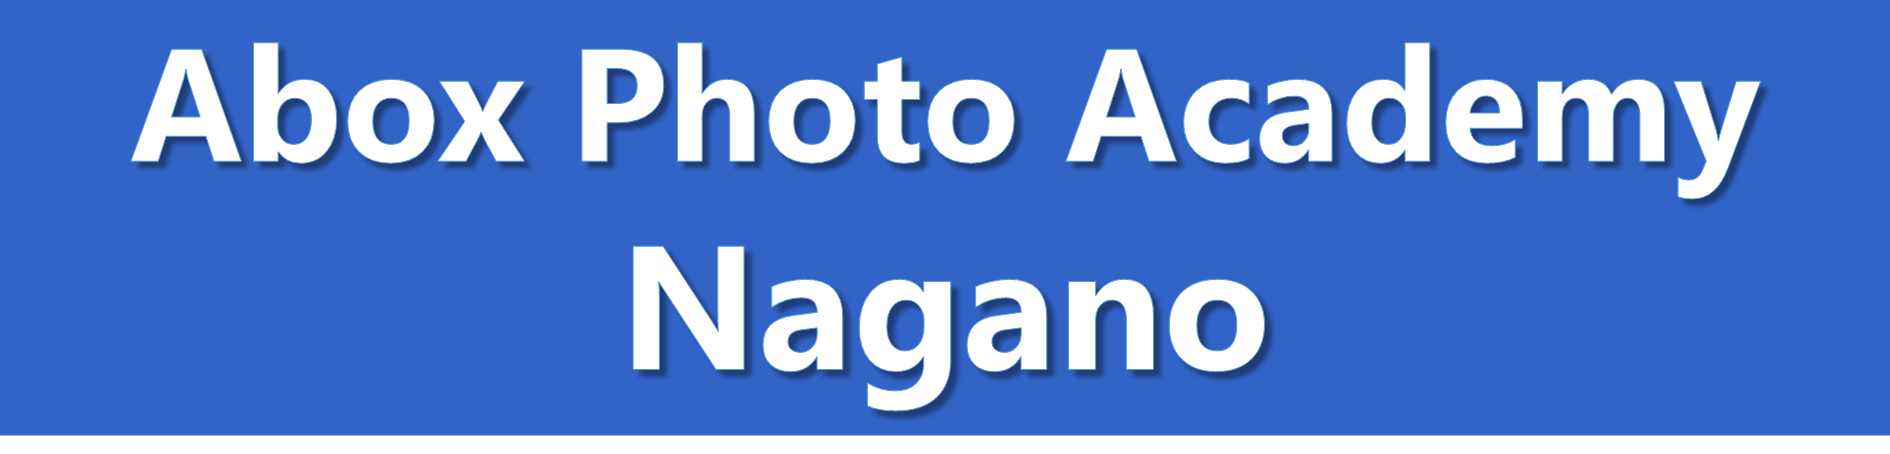 Abox Photo Academy - Nagano